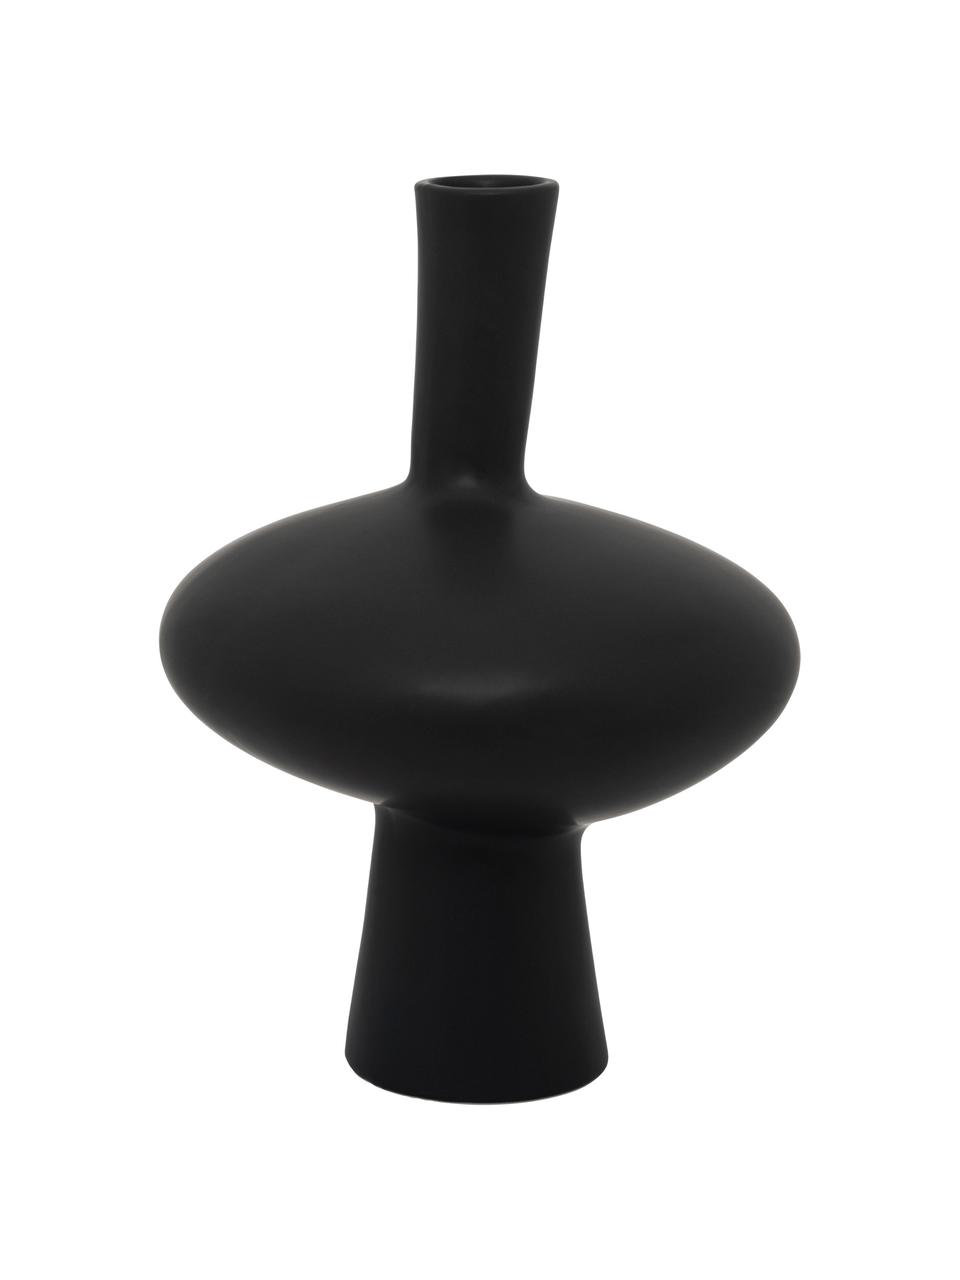 Vaas Moroseta in zwart, Keramiek, Mat zwart, Ø 21 x H 30 cm